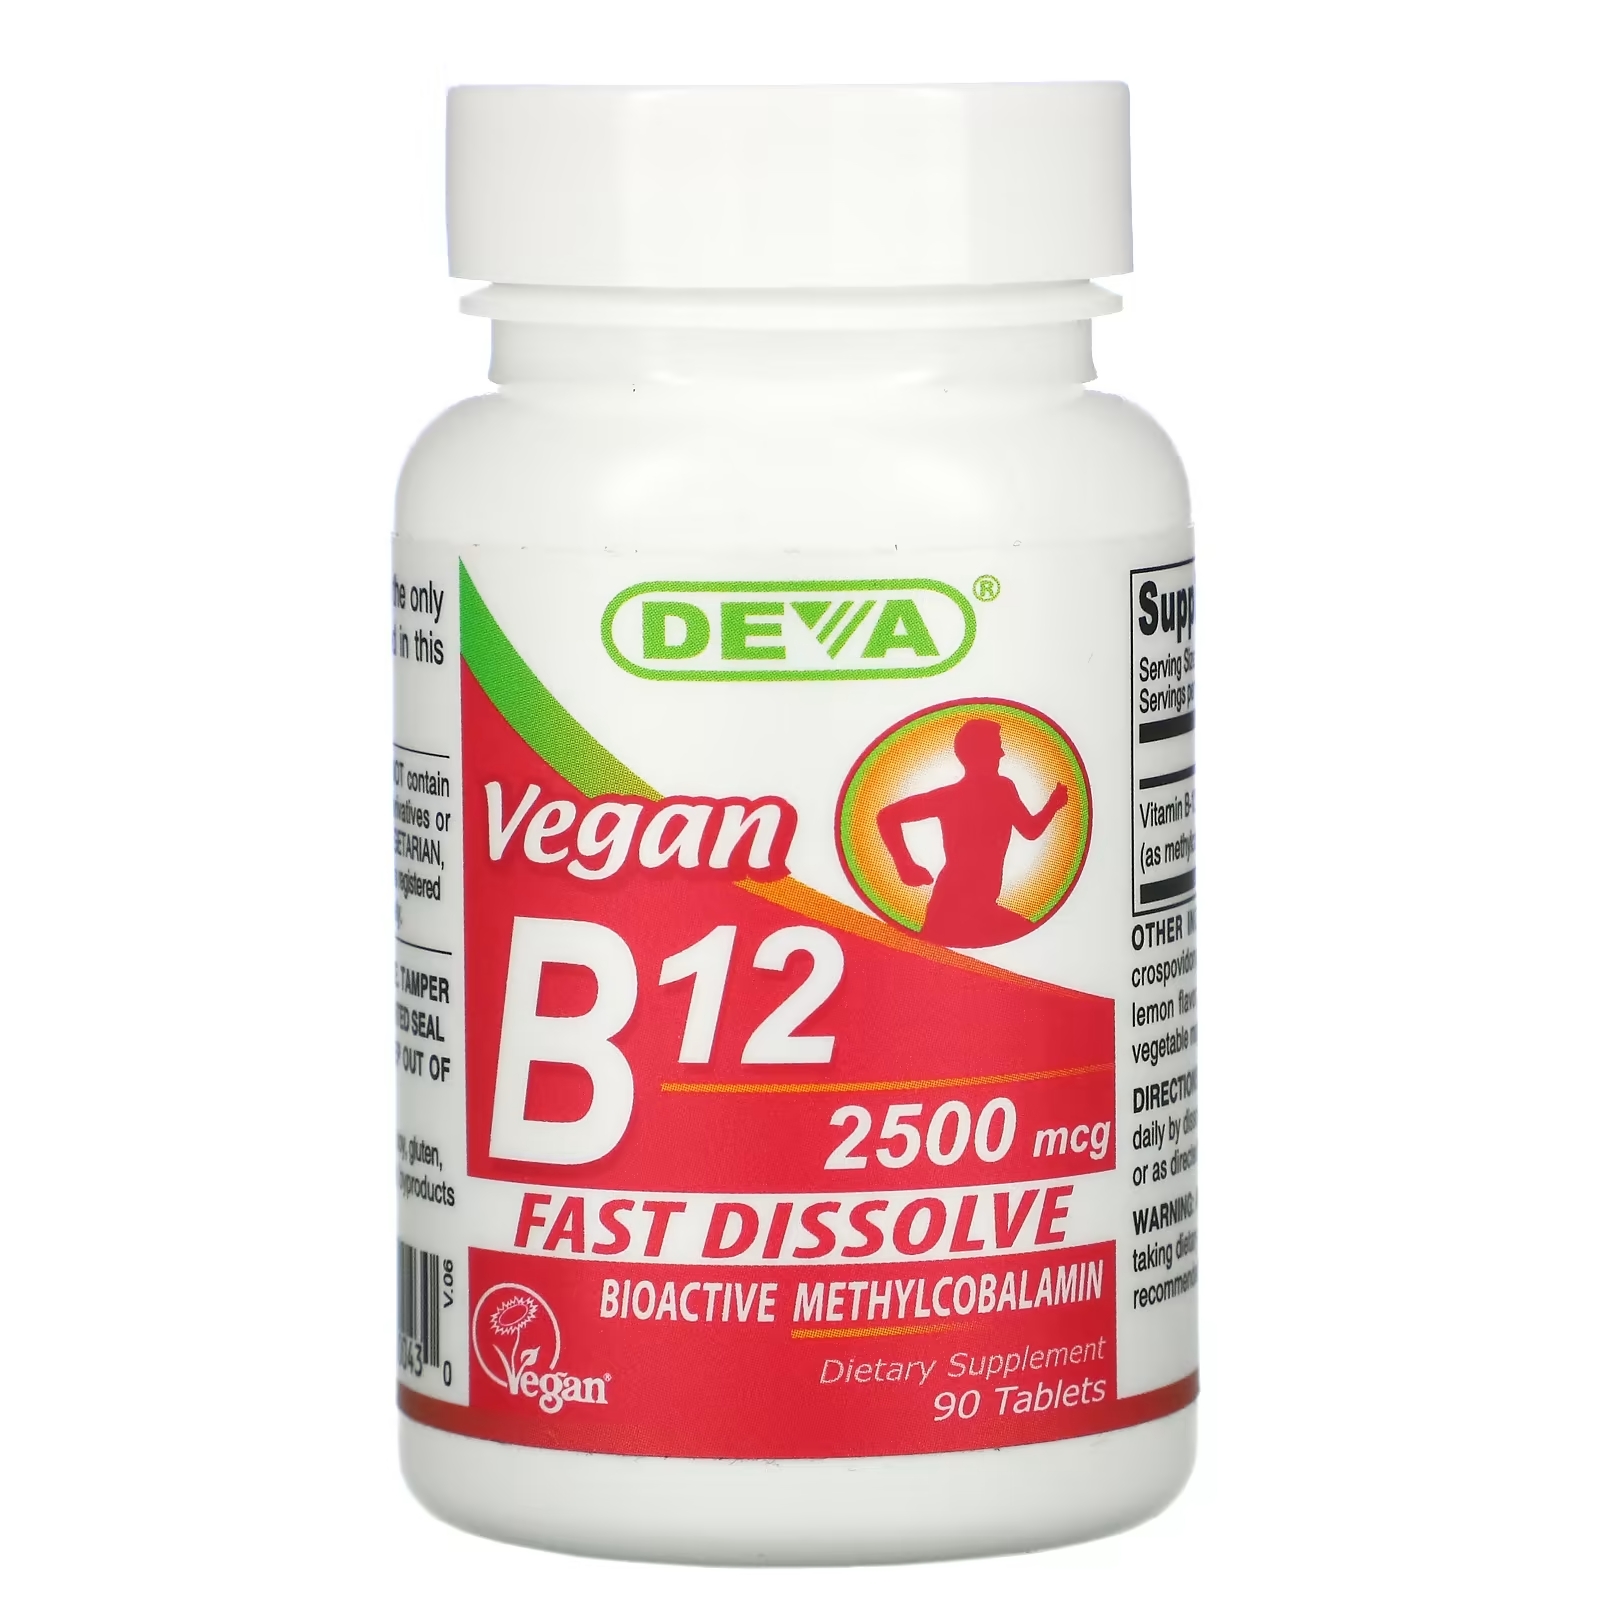 naturesplus витамин b12 500 мкг 90 таблеток Deva Веганский витамин B12 быстрорастворимый 2500 мкг, 90 таблеток